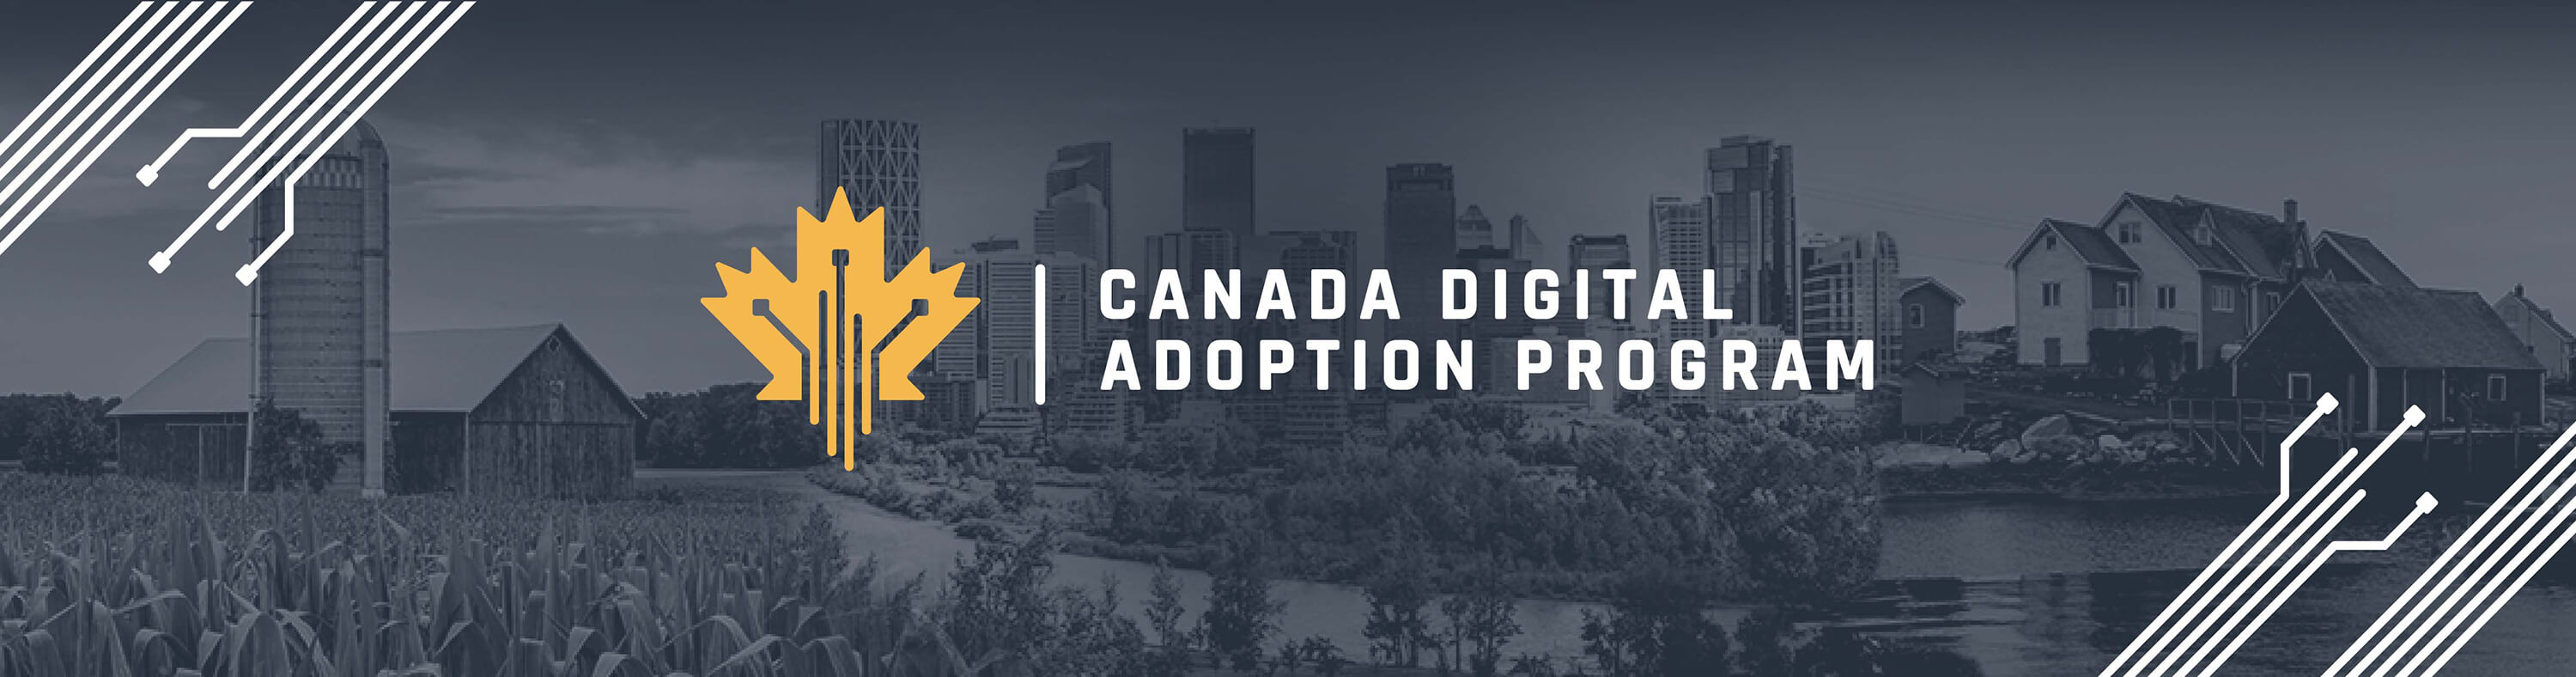 Canada Digital Adoption Program CDAP program certified digital advisor mooc adverting inc. 